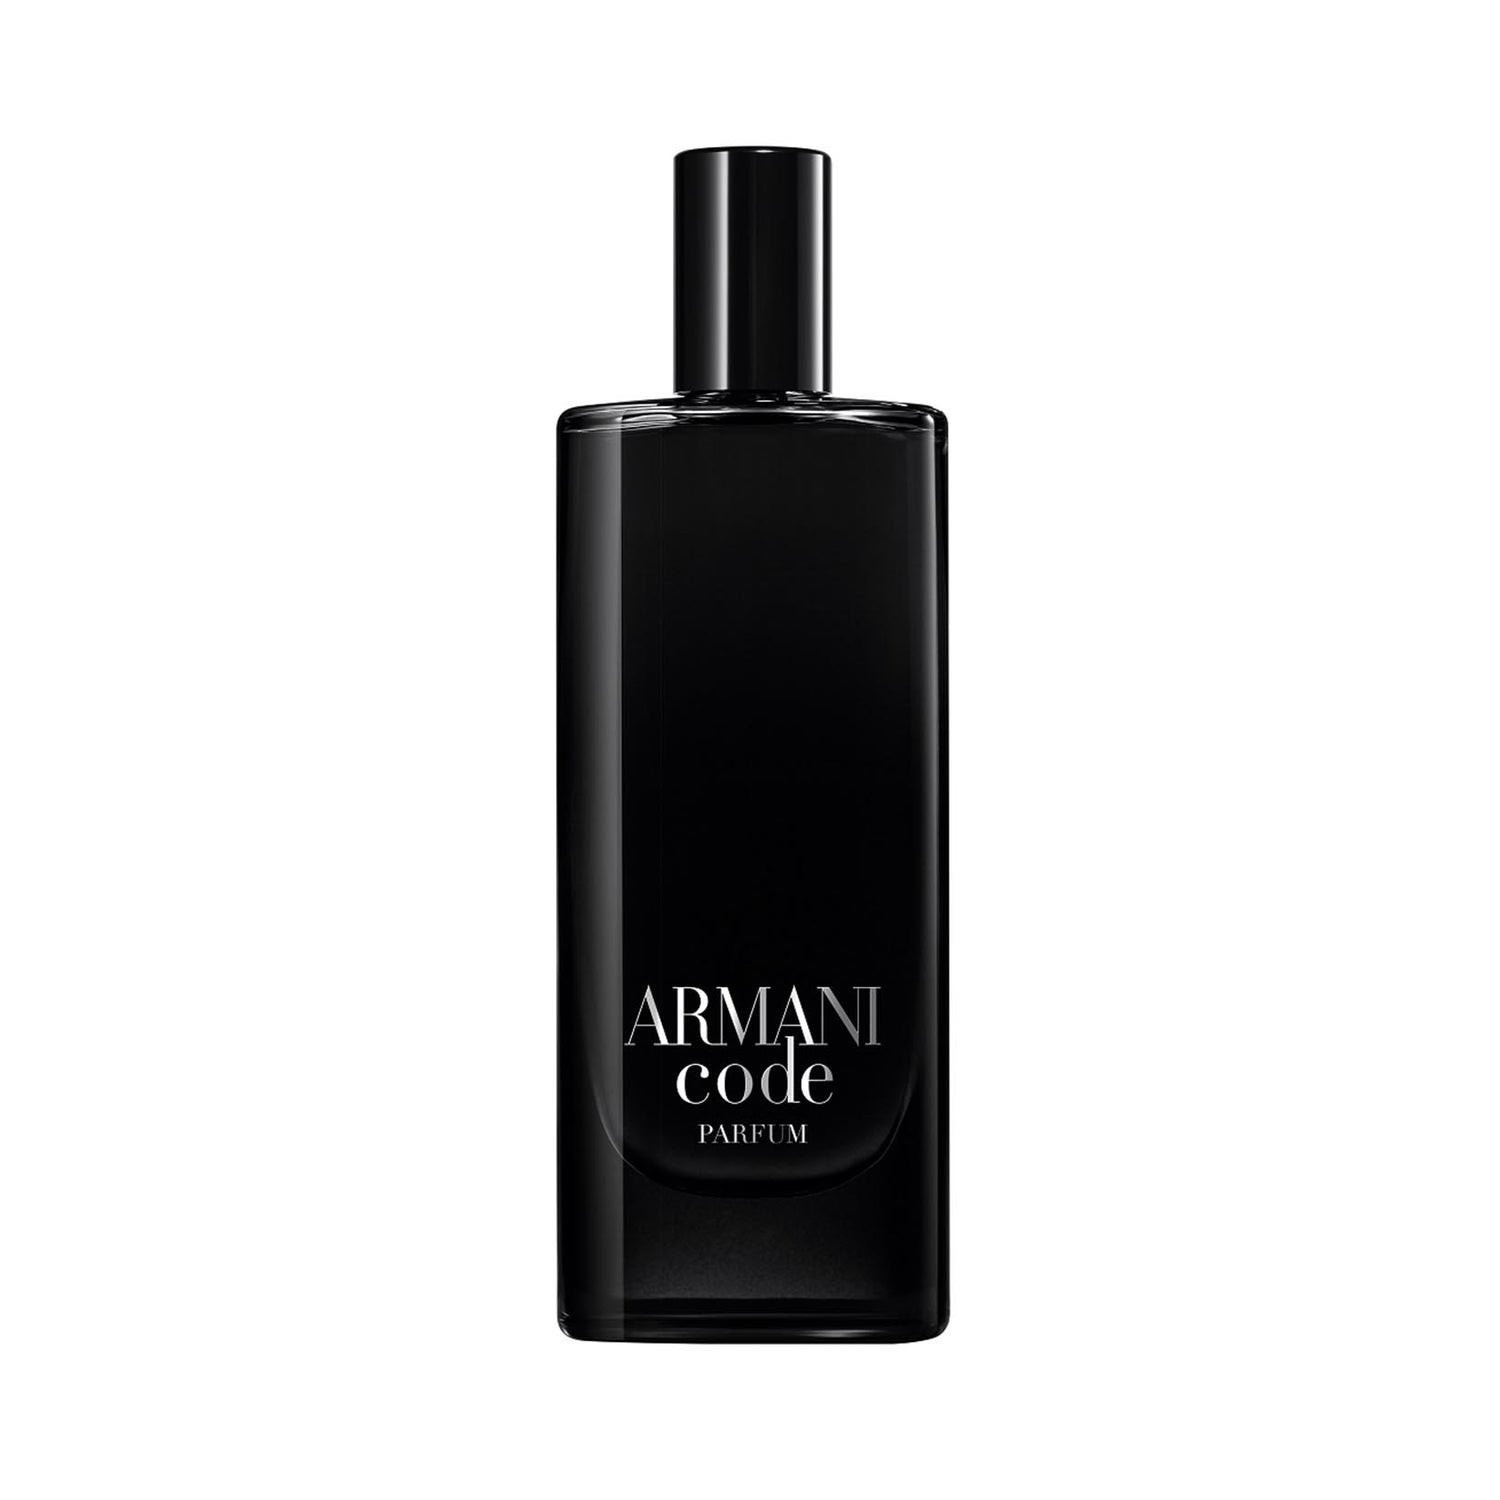 Giorgio Armani Code Parfum Eau de Parfum 15ml | PromoFarma